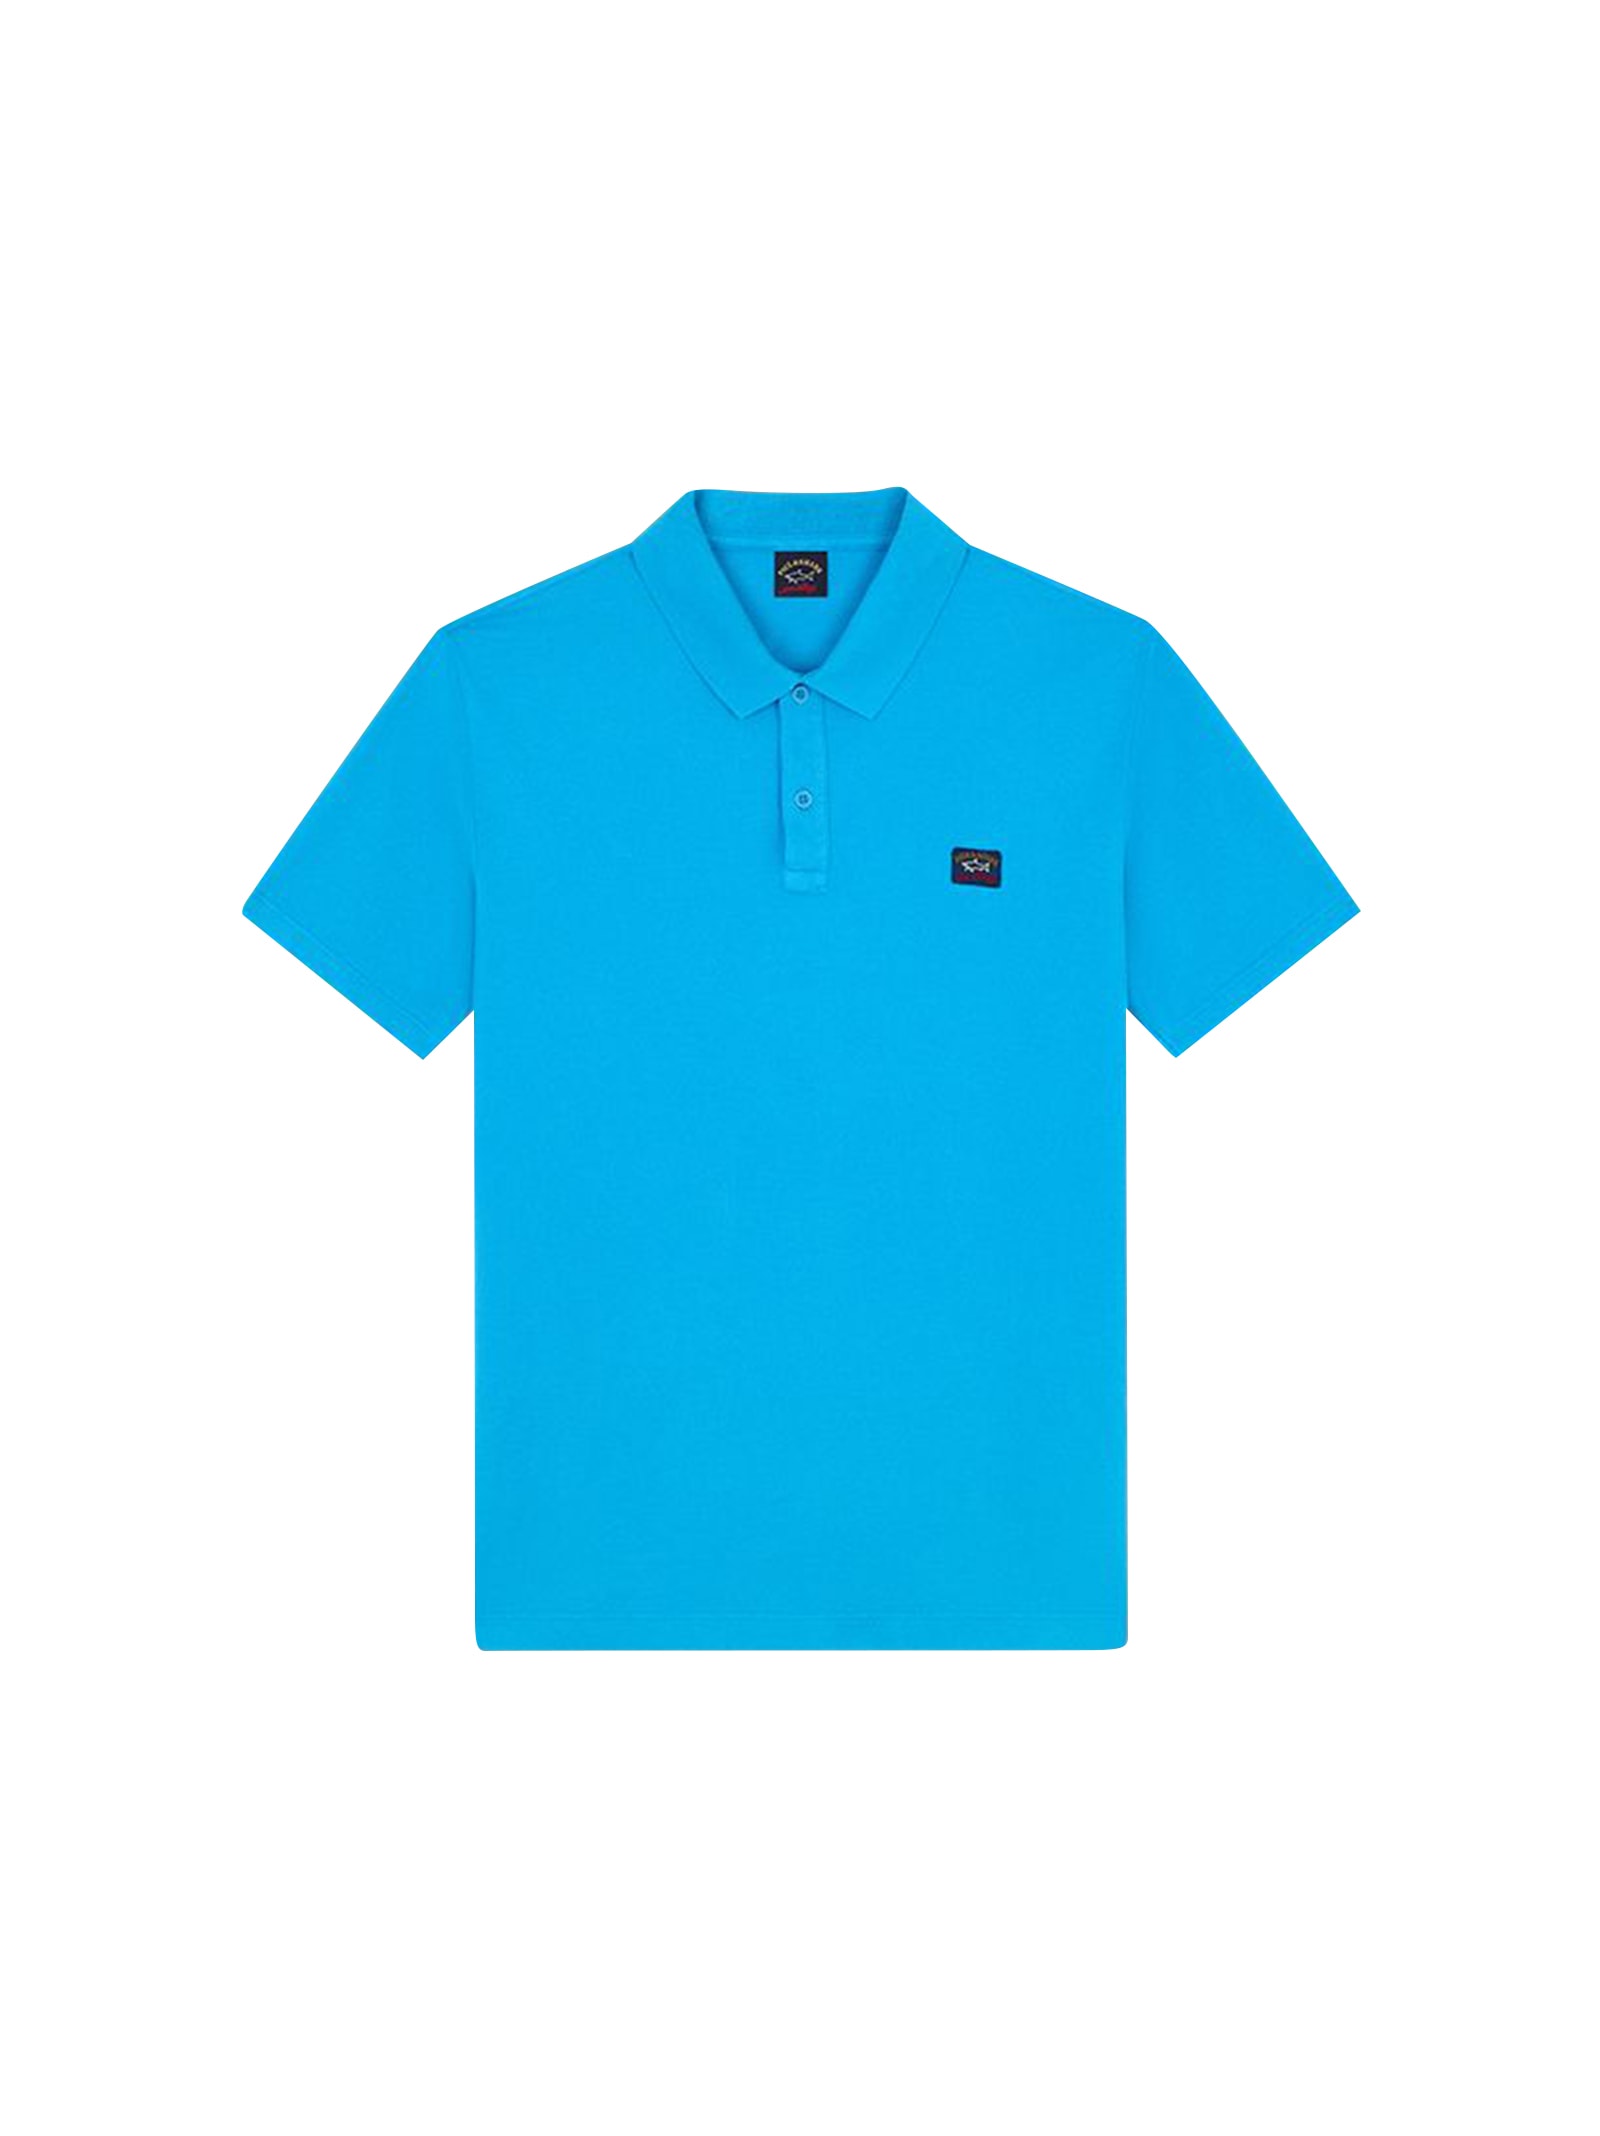 Paul&amp;shark Garment Dyed Pique Cotton Polo In Azzurro